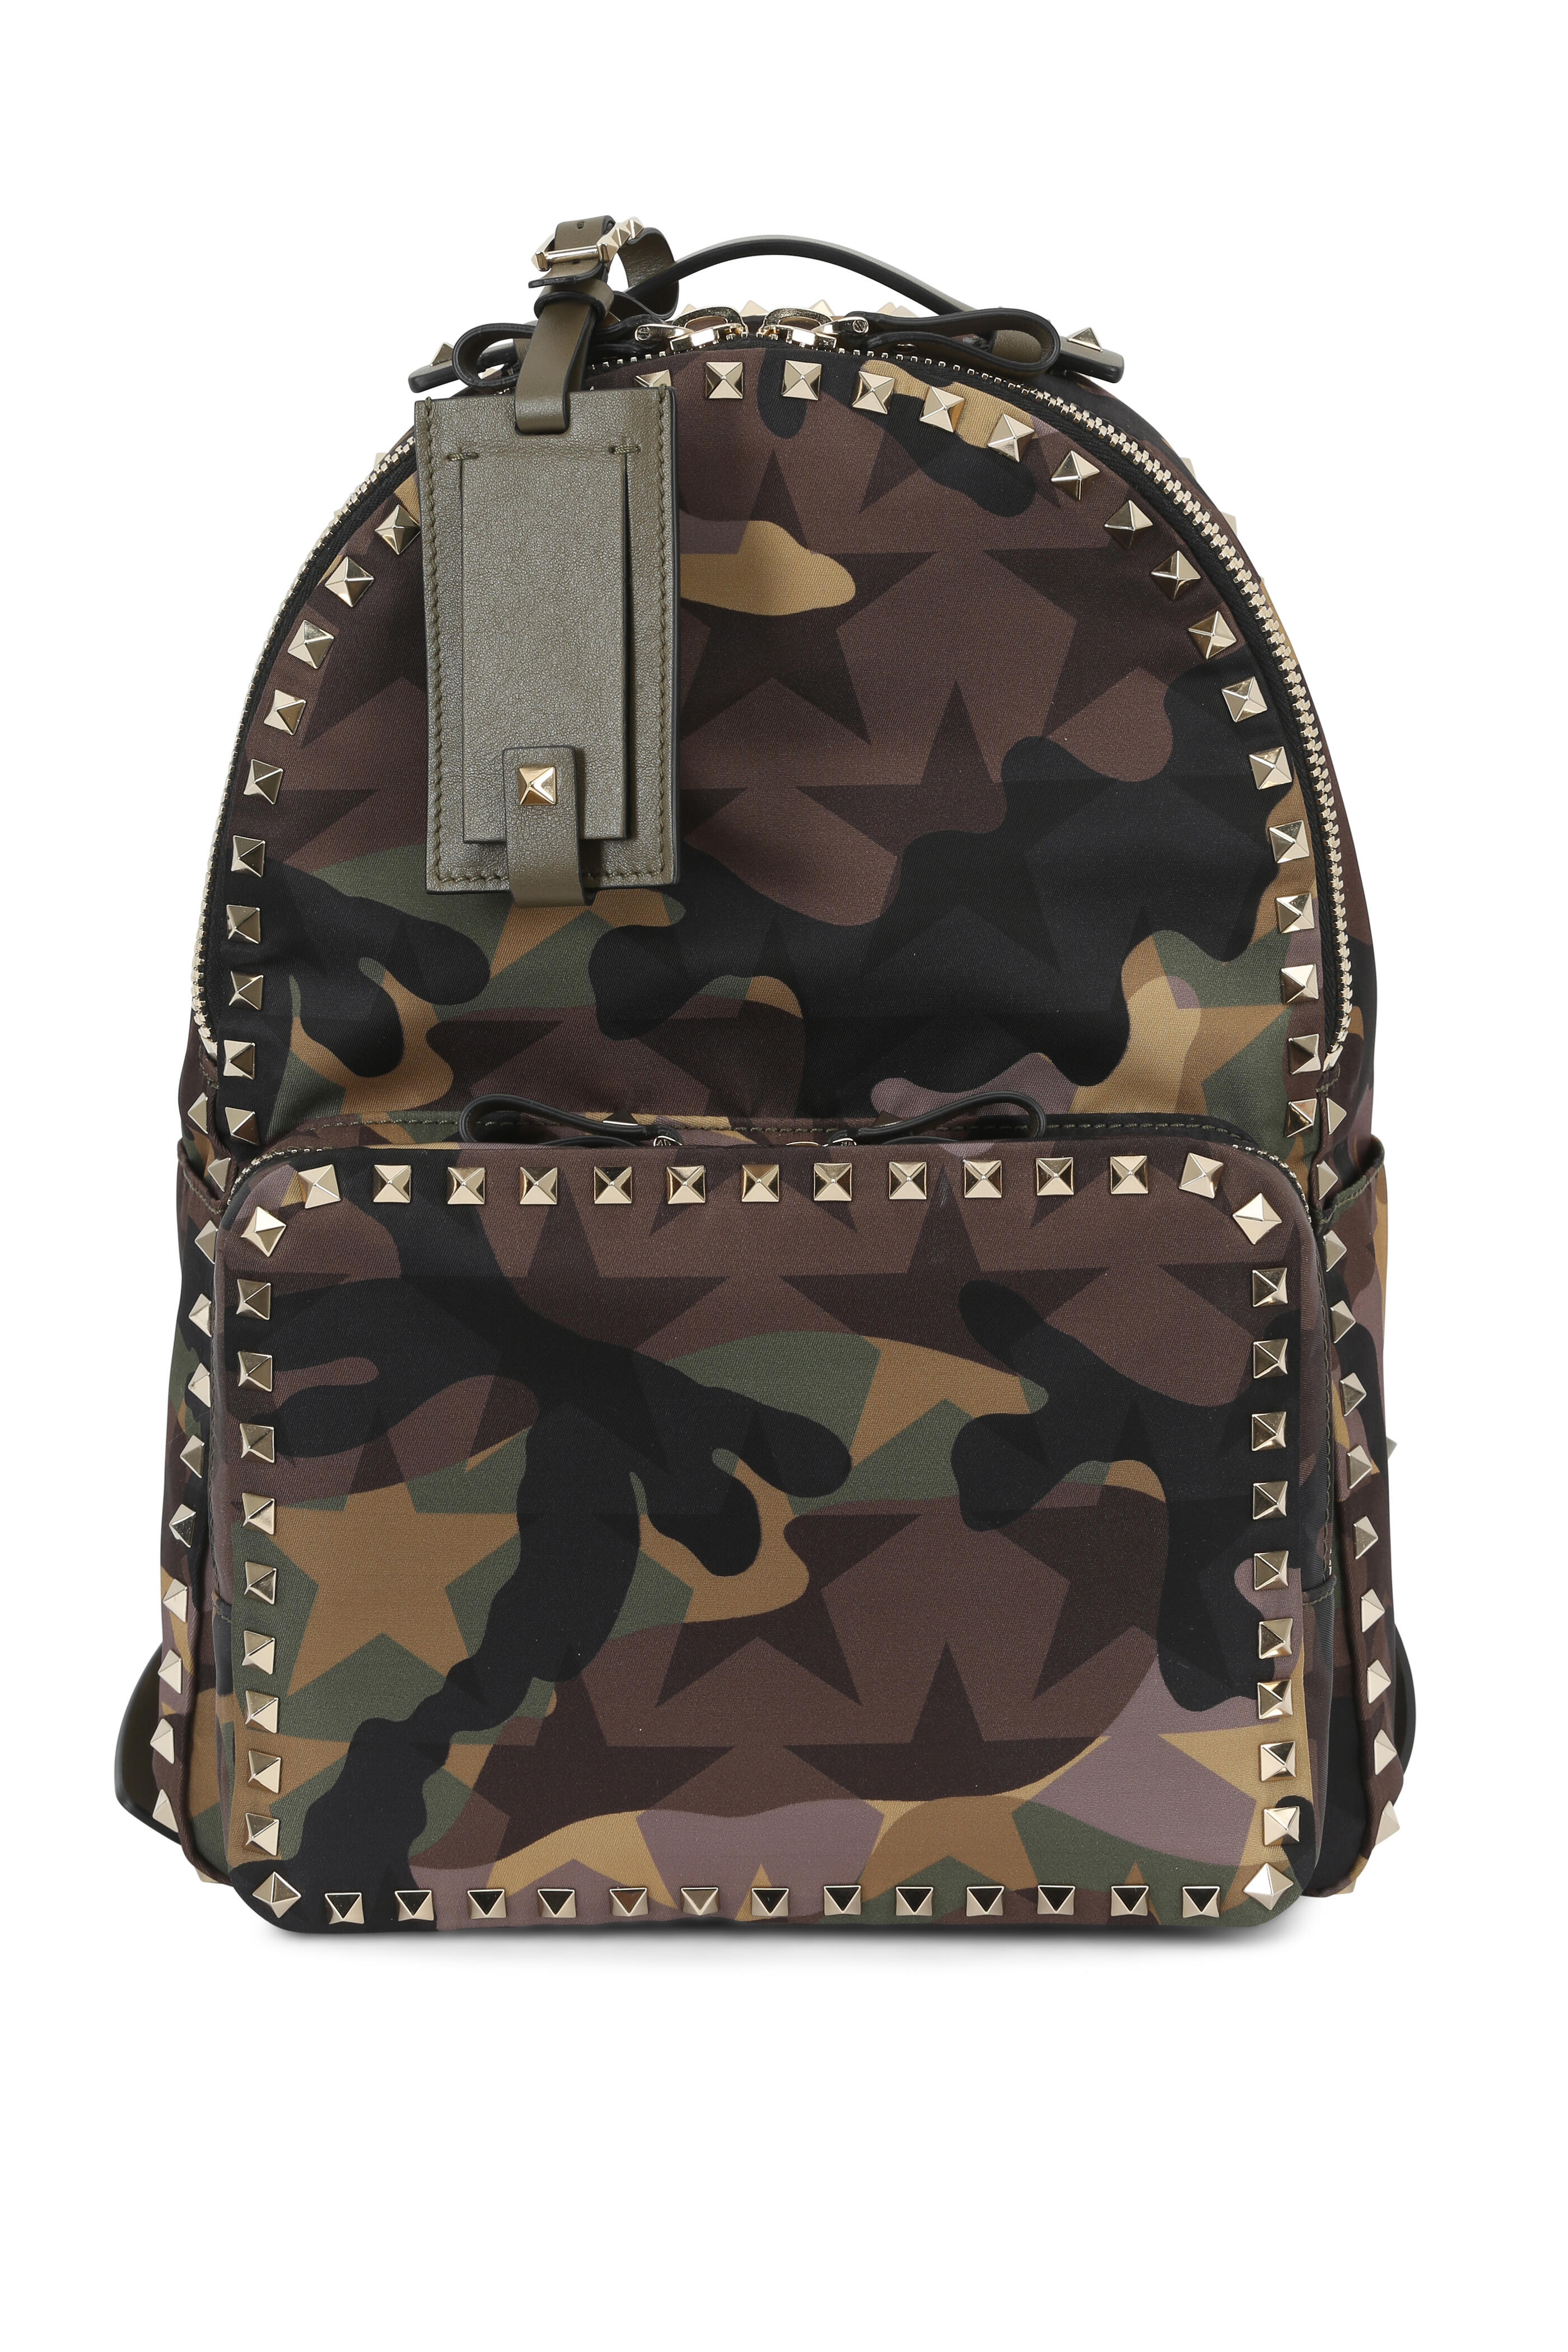 Valentino Garavani Men's Rockstud Pet Customizable Backpack - Black - Backpacks